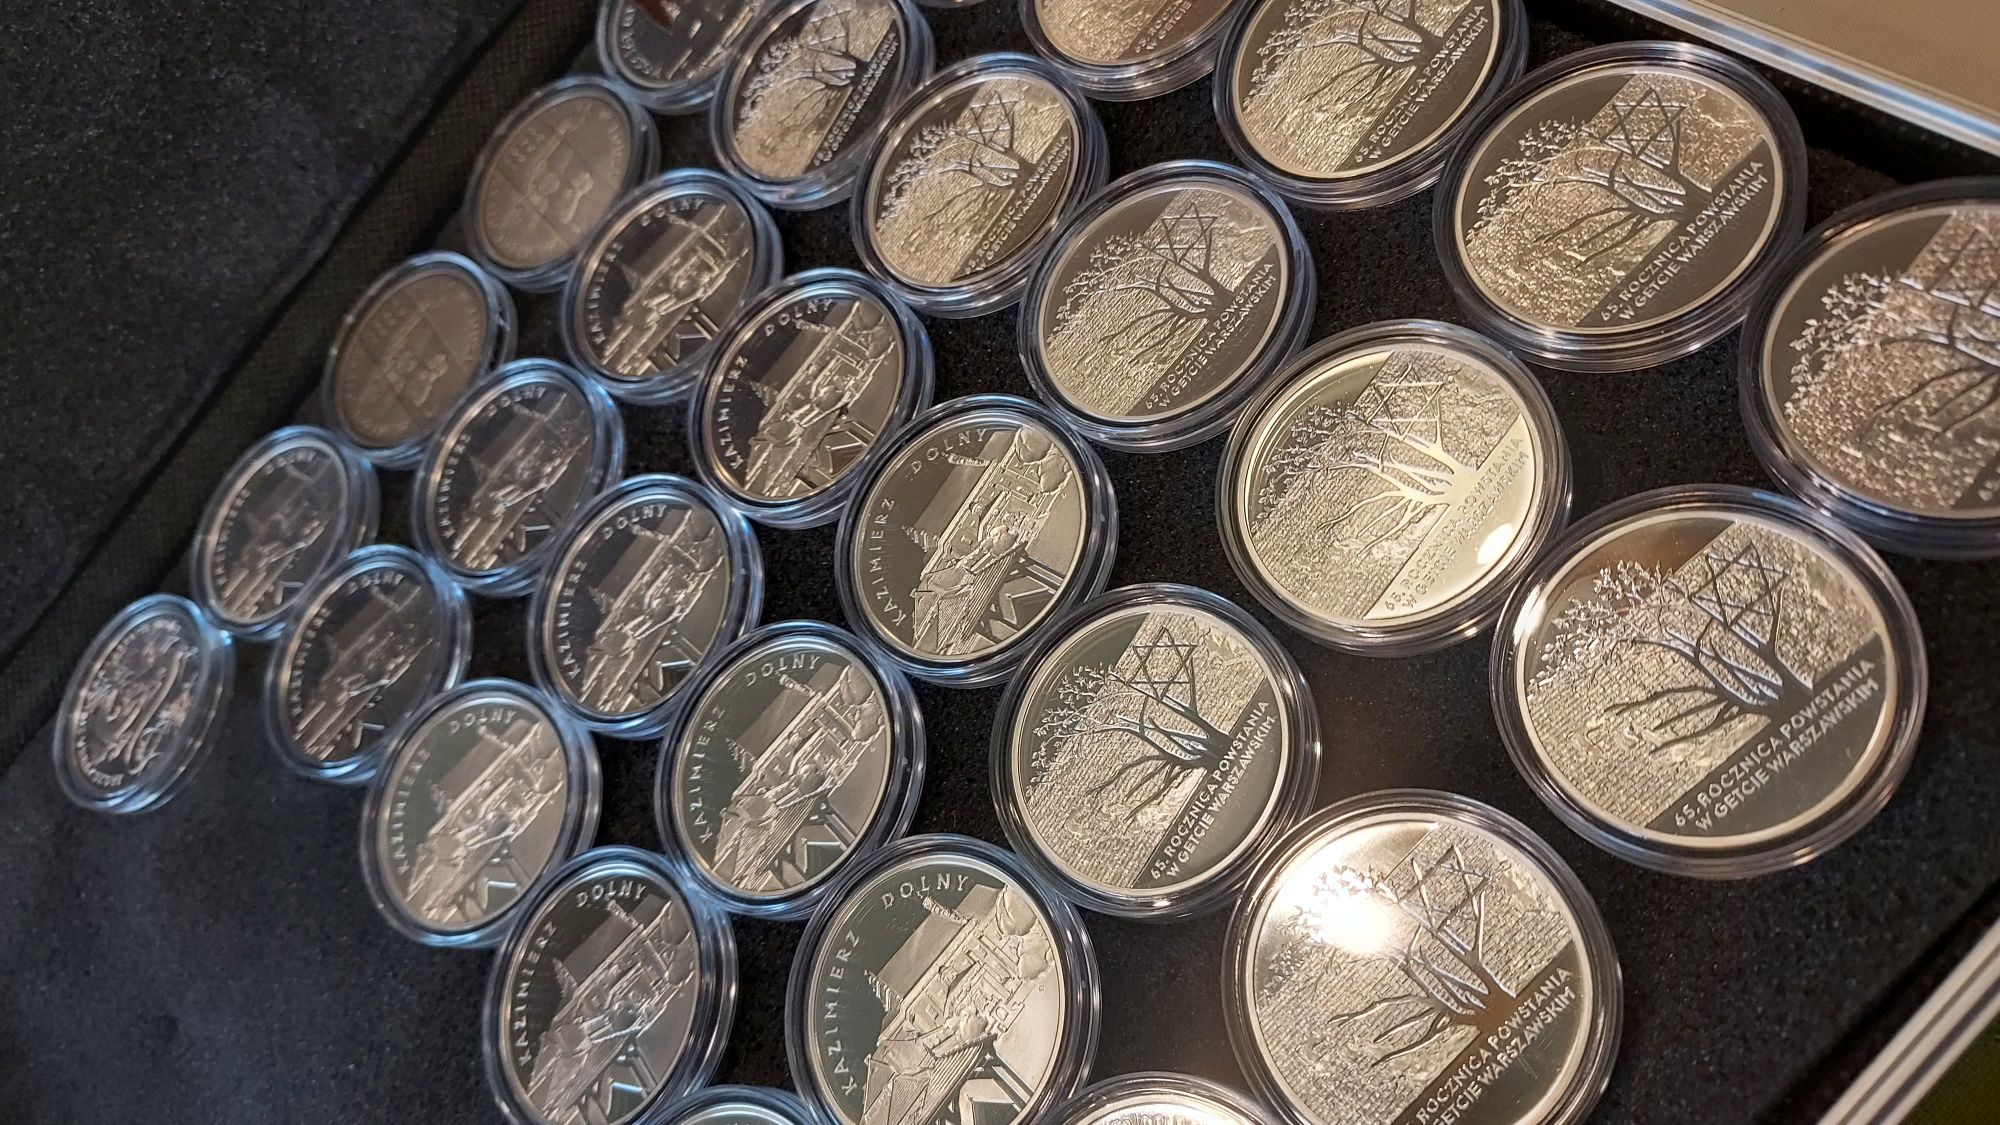 31x srebrne 20 zł kolekcjonerskie zestaw ponad 875 gram srebra